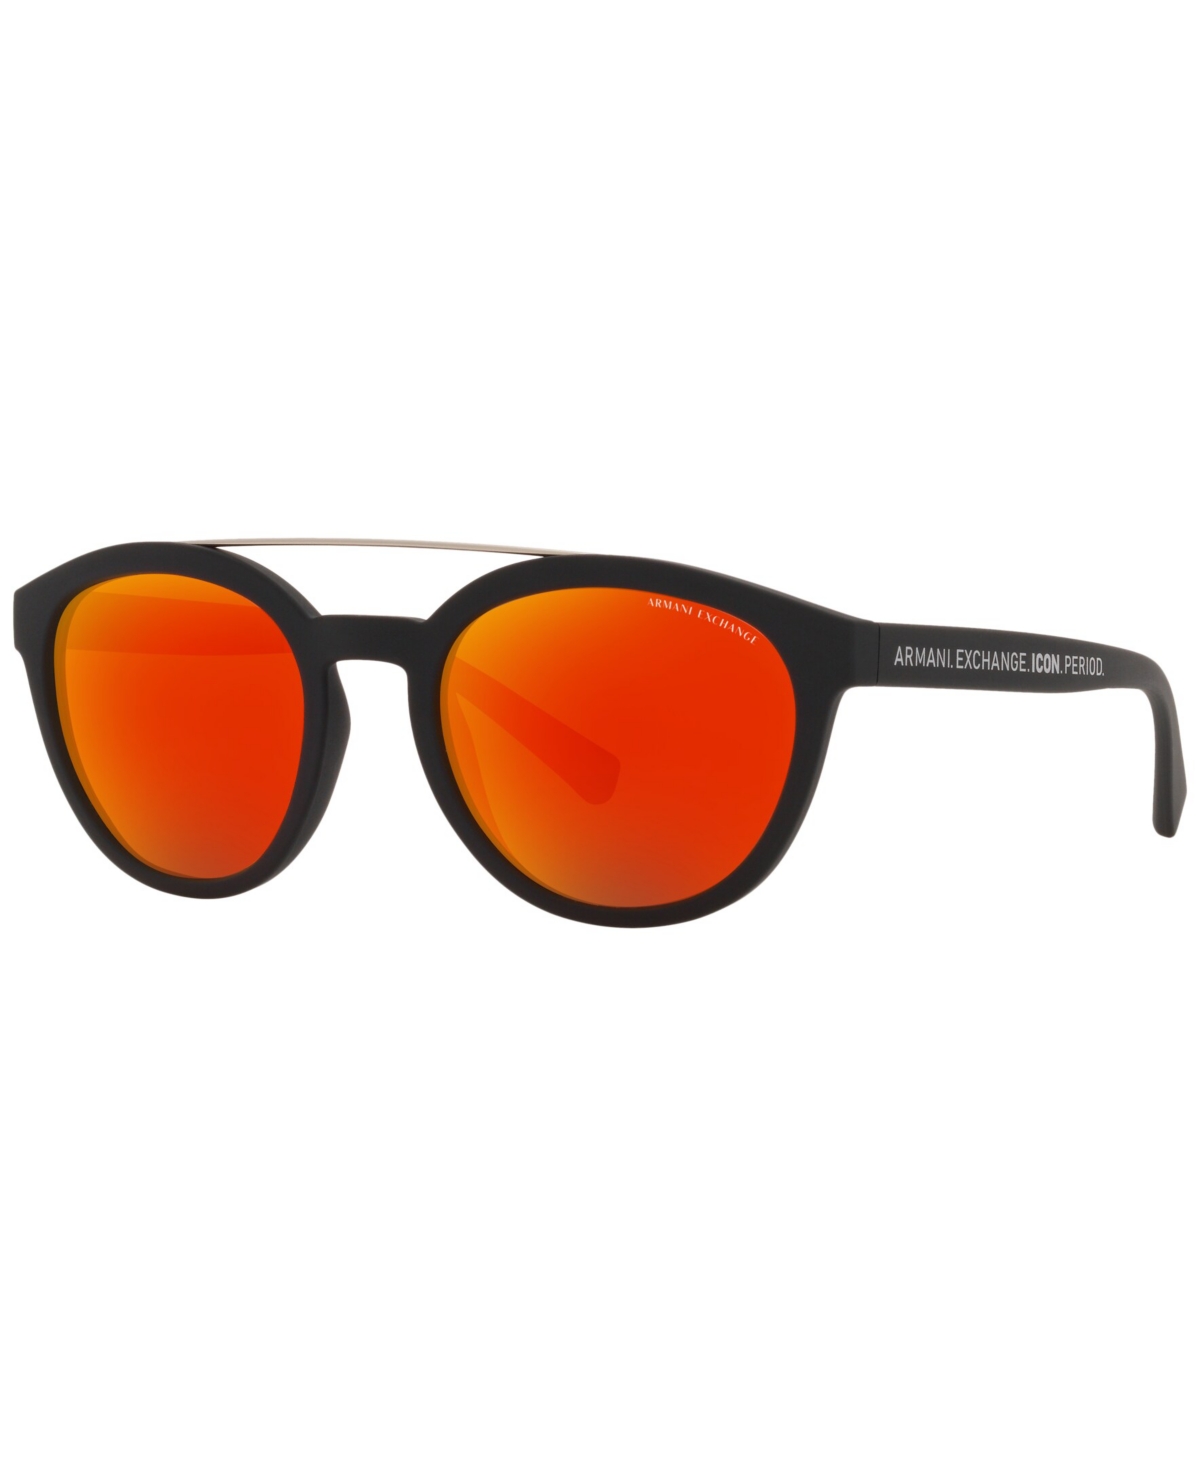 Ax Armani Exchange Low Bridge Fit Men's Sunglasses, Ax4118sf 54 In Matte Black